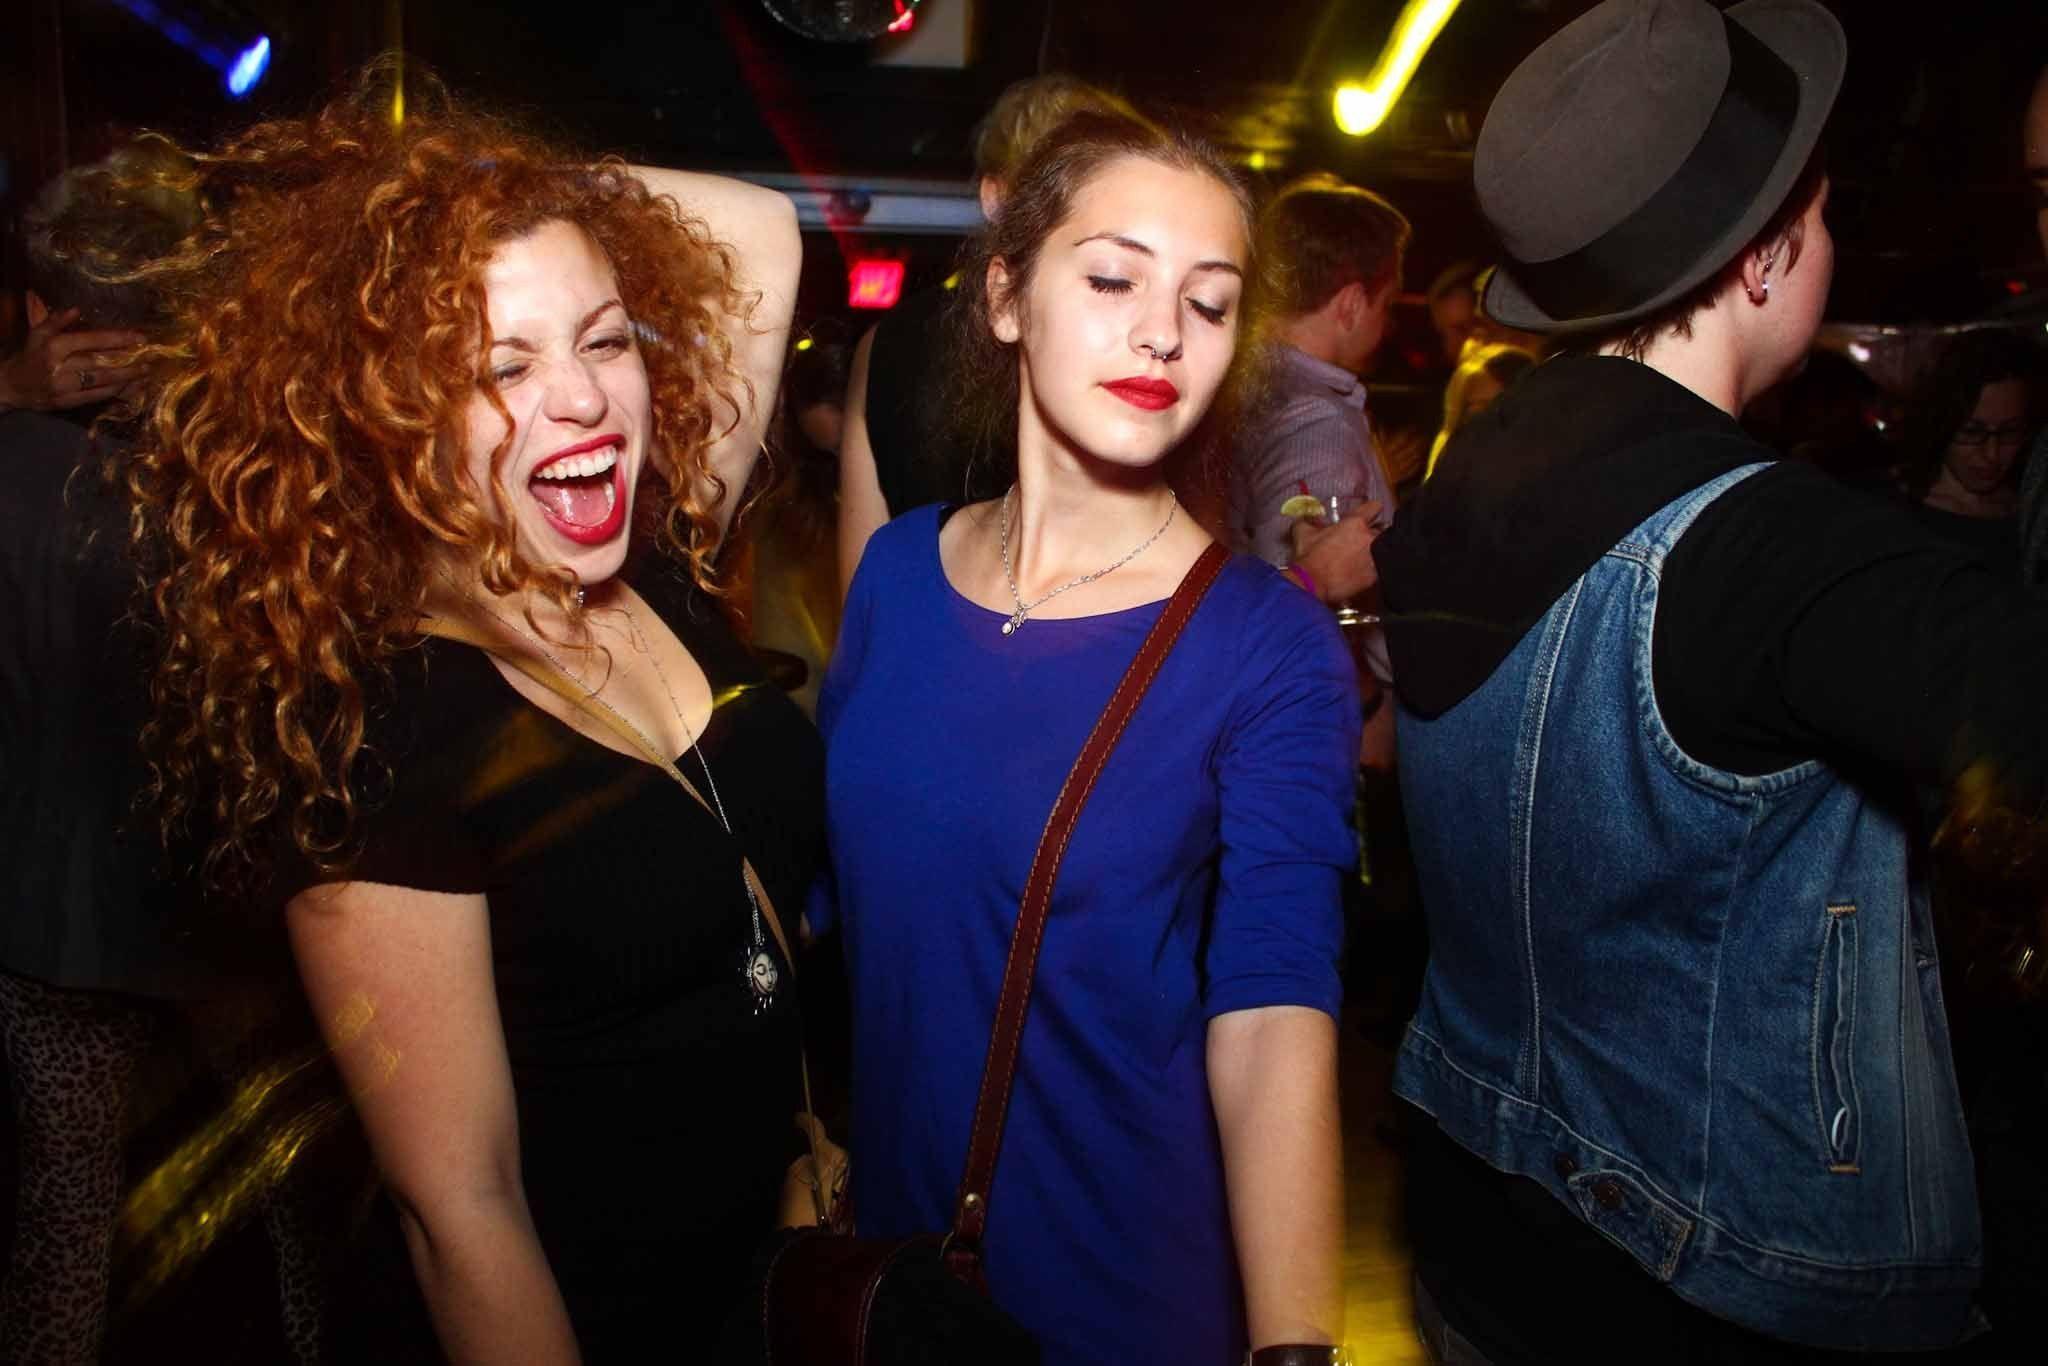 Lesbian nightclubs in nyc